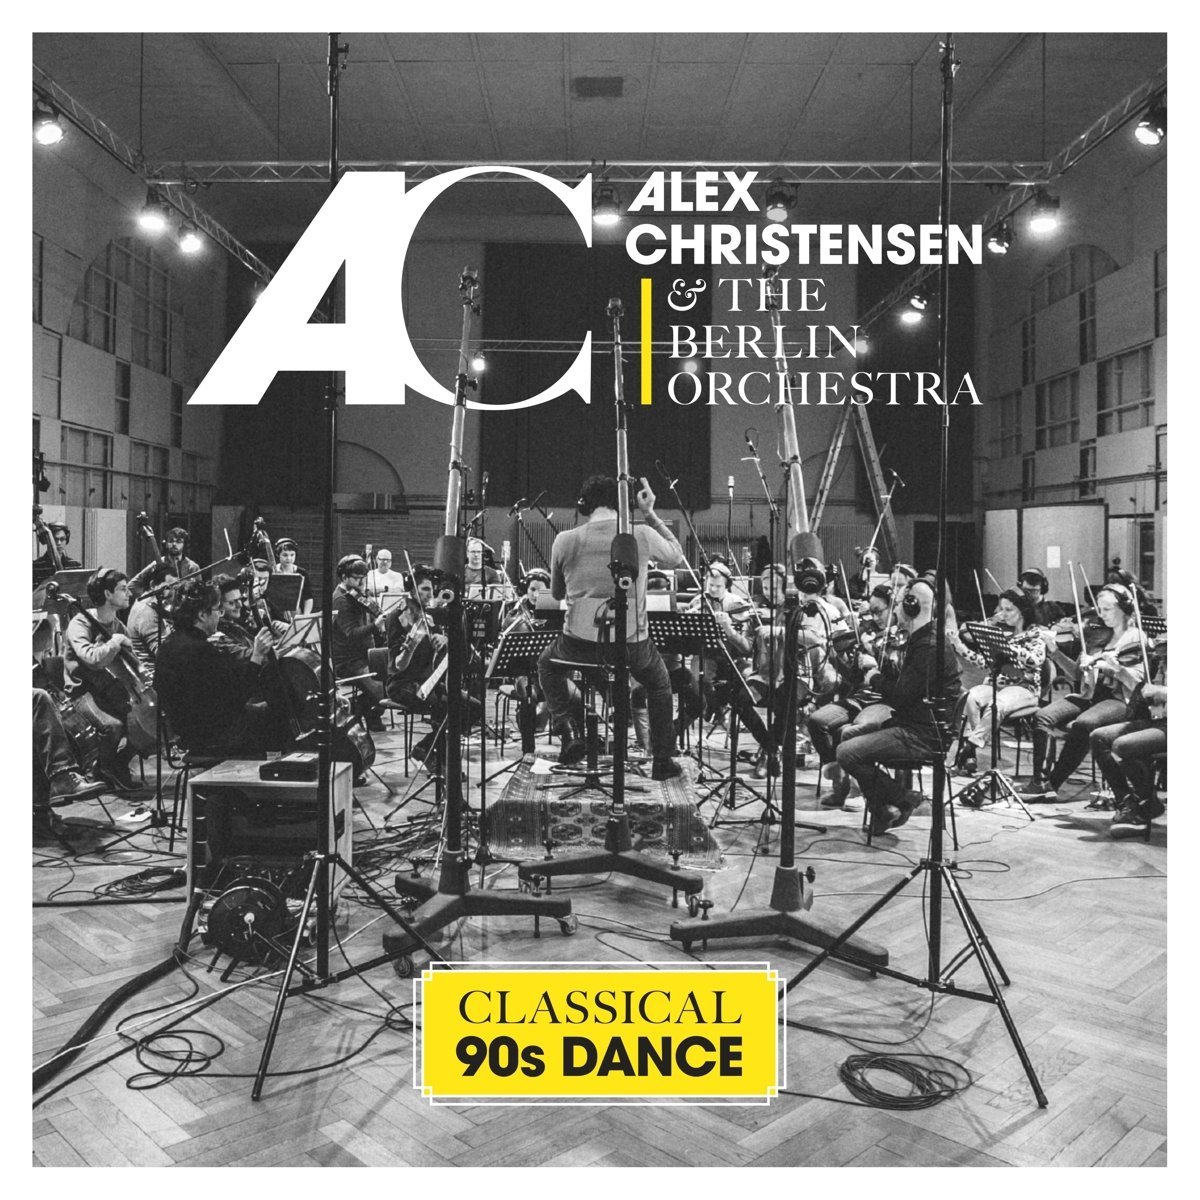 Konkurs. Płyta z autografem Alex’a Christensen’a legendy euro-dance 90’s. Alex Christensen & The Berlin Orchestra – Classical 90s Dance